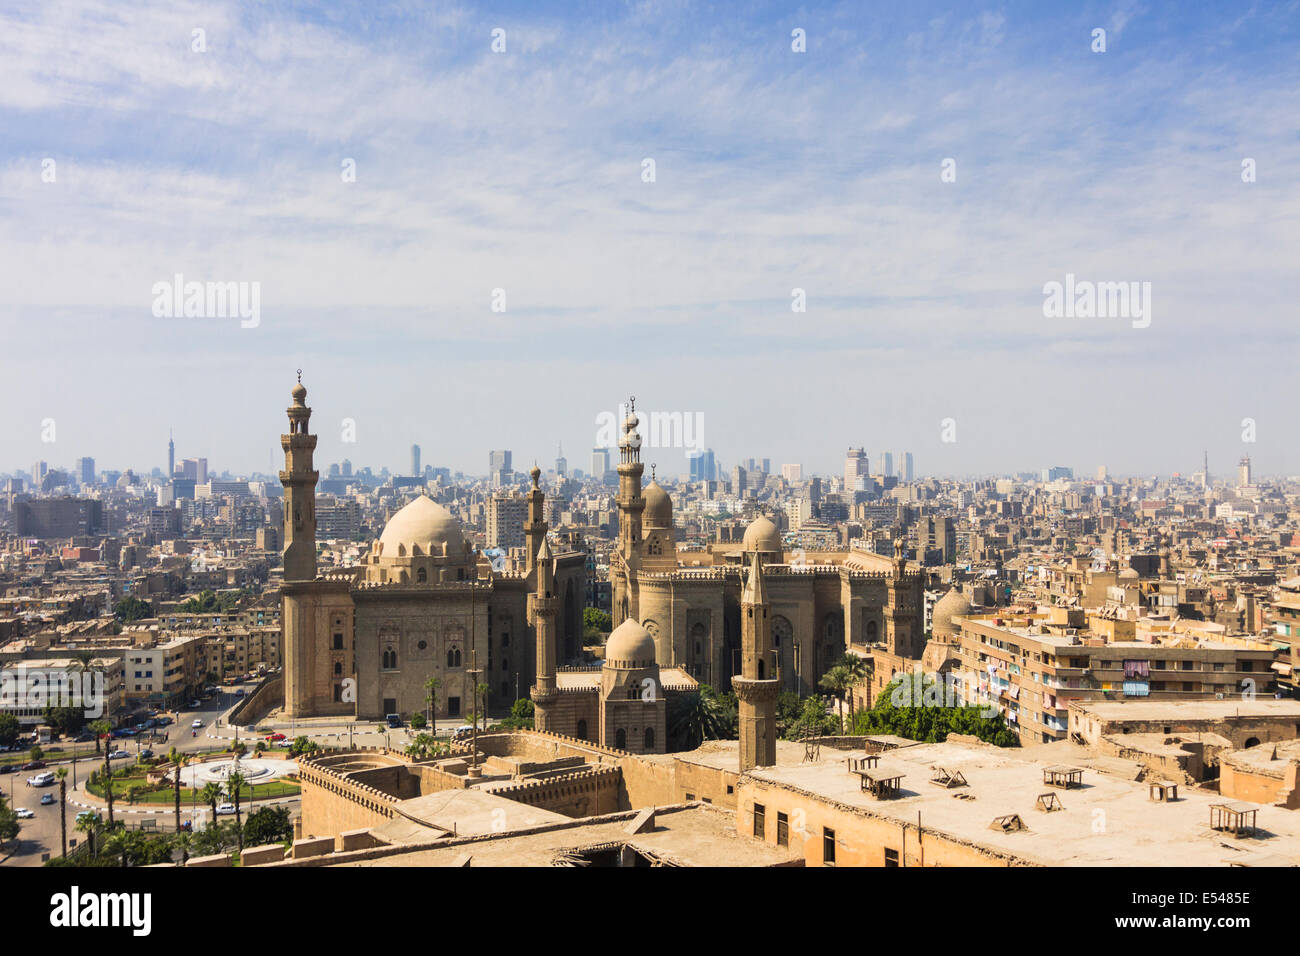 Sultan Hassan Madrassa and Al Rifai mosque from the Citadel. Cairo, Egypt. Stock Photo